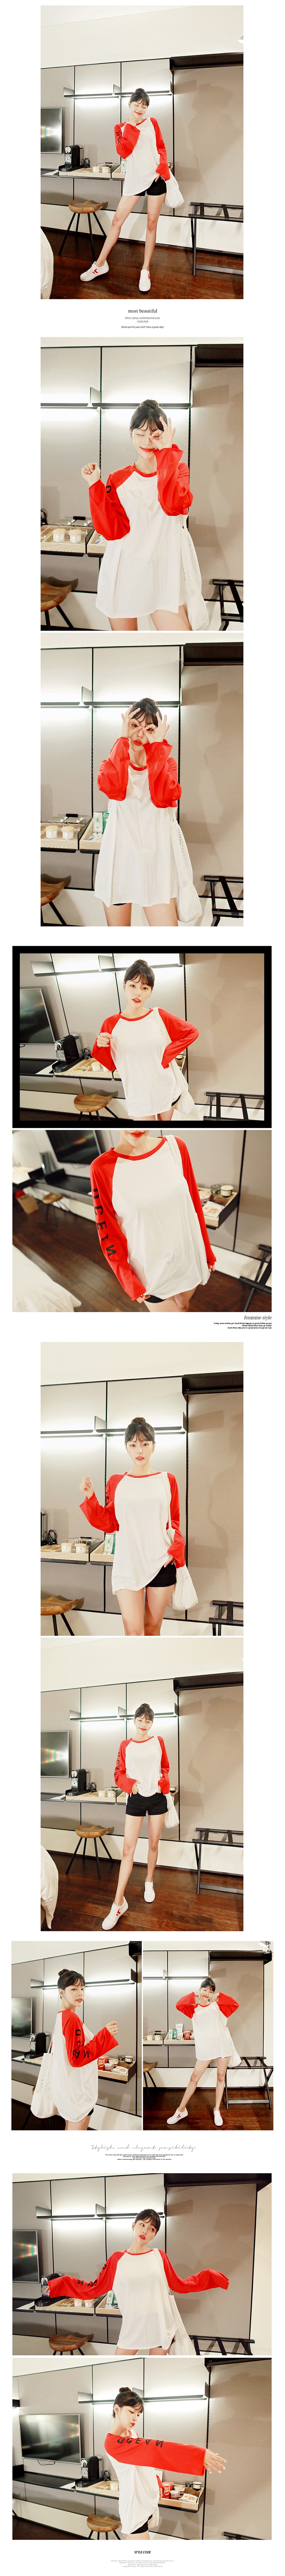 KOREA Letter Print Raglan T-shirt Red One Size(Free) [Free Shipping]